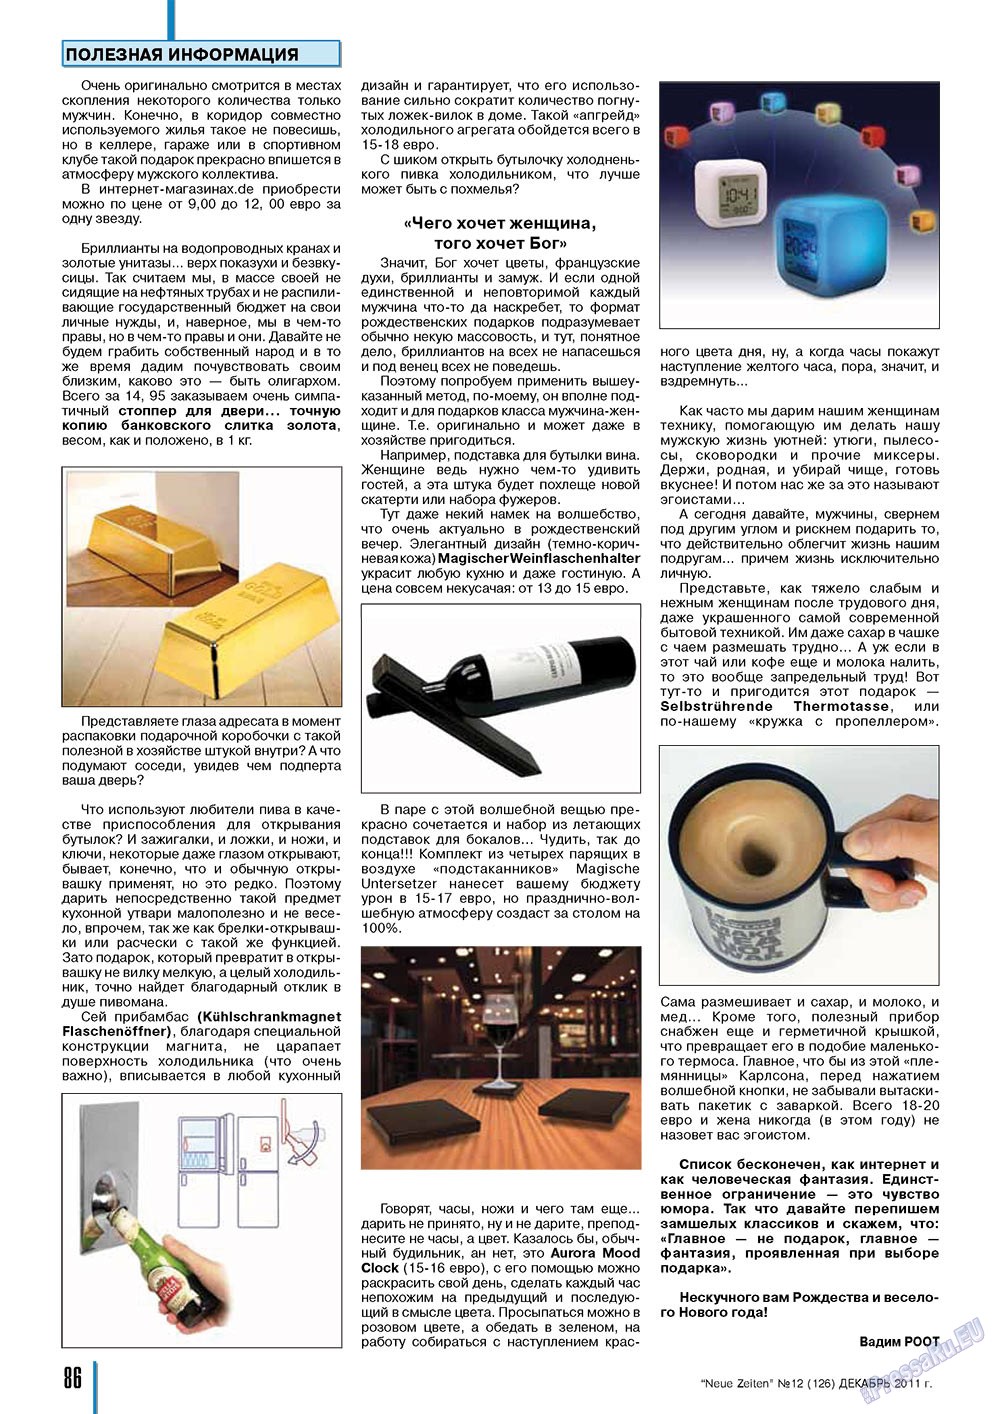 Neue Zeiten (журнал). 2011 год, номер 12, стр. 86